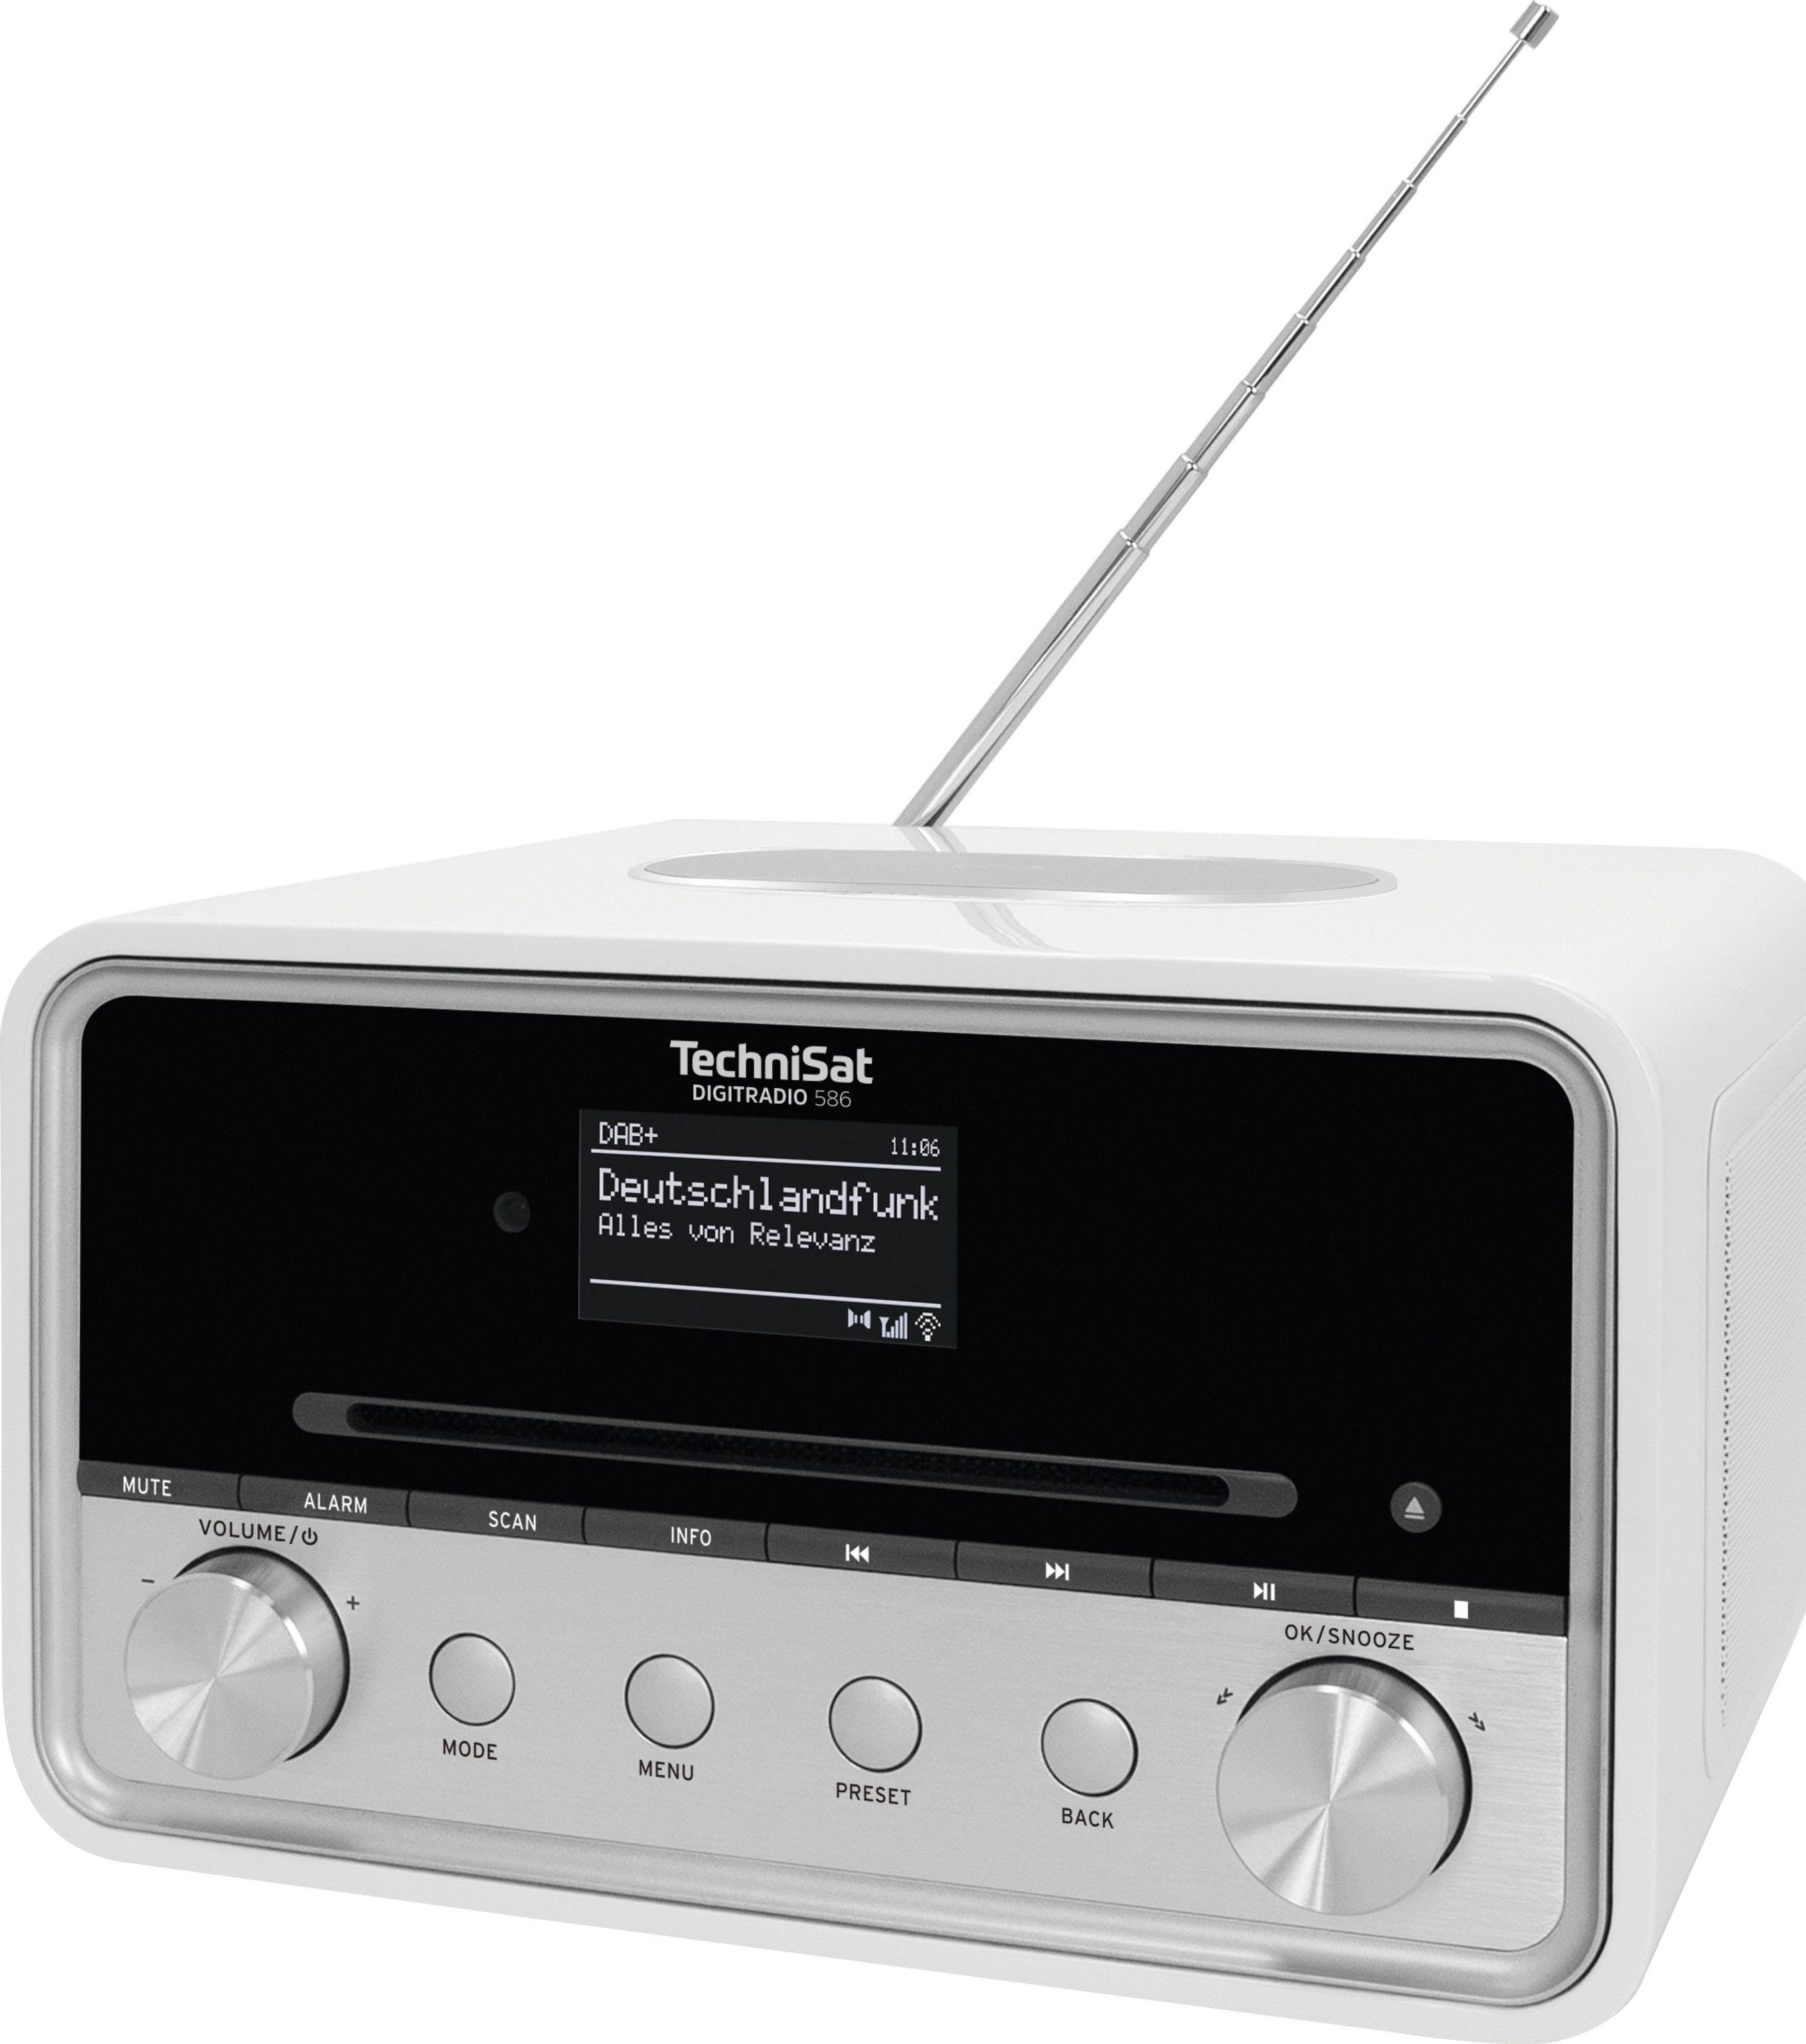 TechniSat DIGITRADIO 586 Radio (Digitalradio W) (DAB), RDS, UKW Silber Internetradio, mit 20